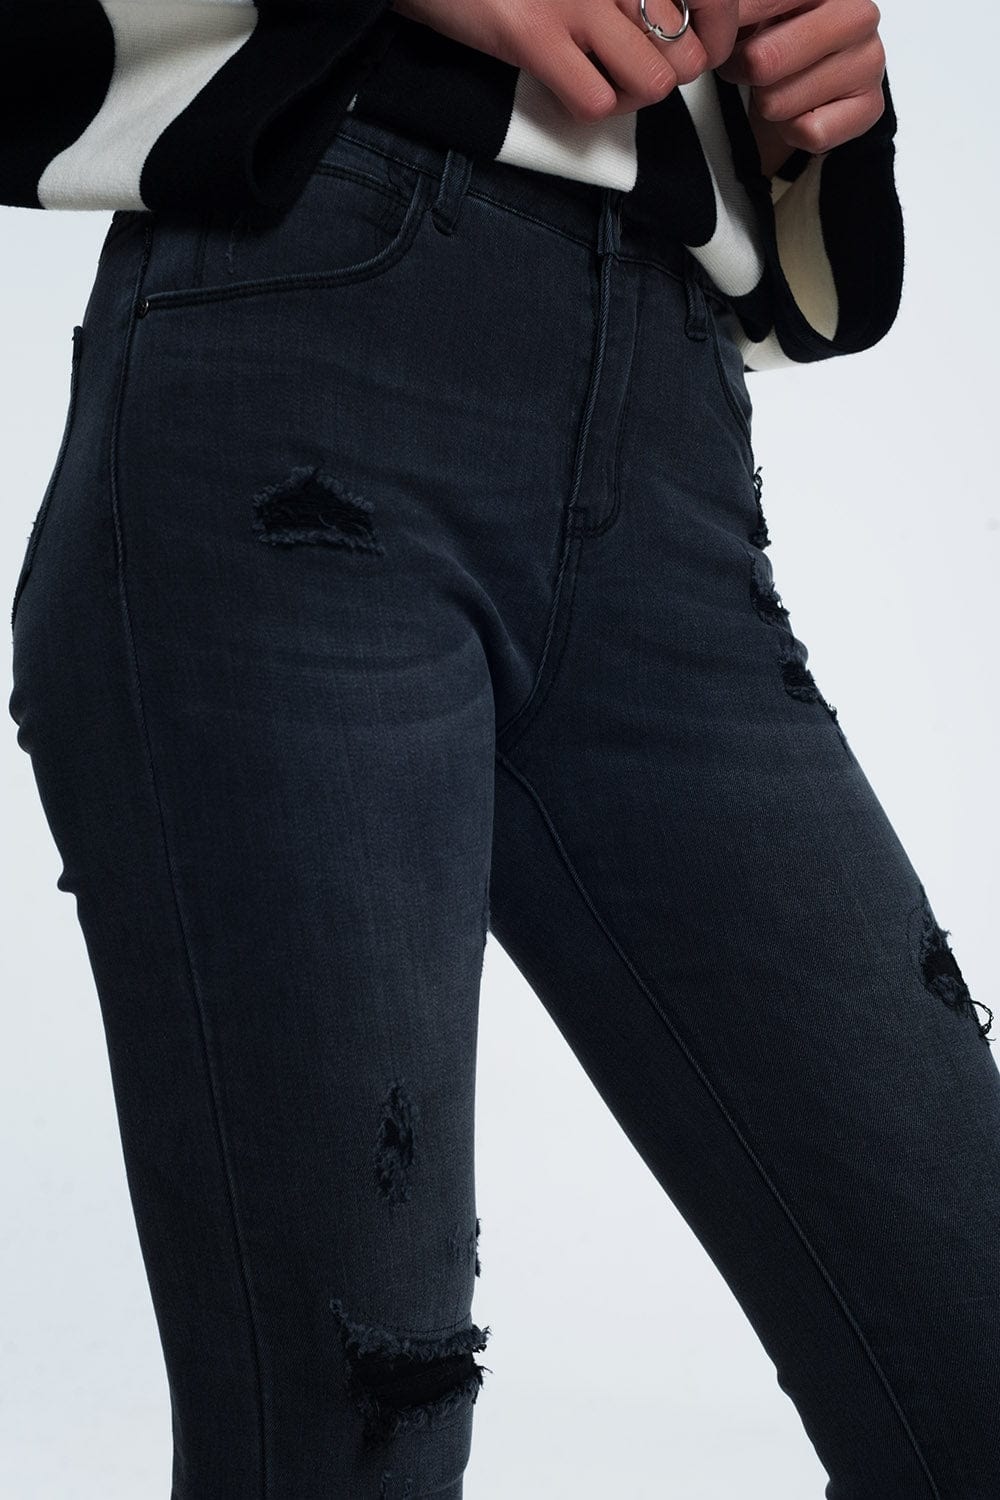 Q2 Women's Jean Distressed Skinny Jeans in Black